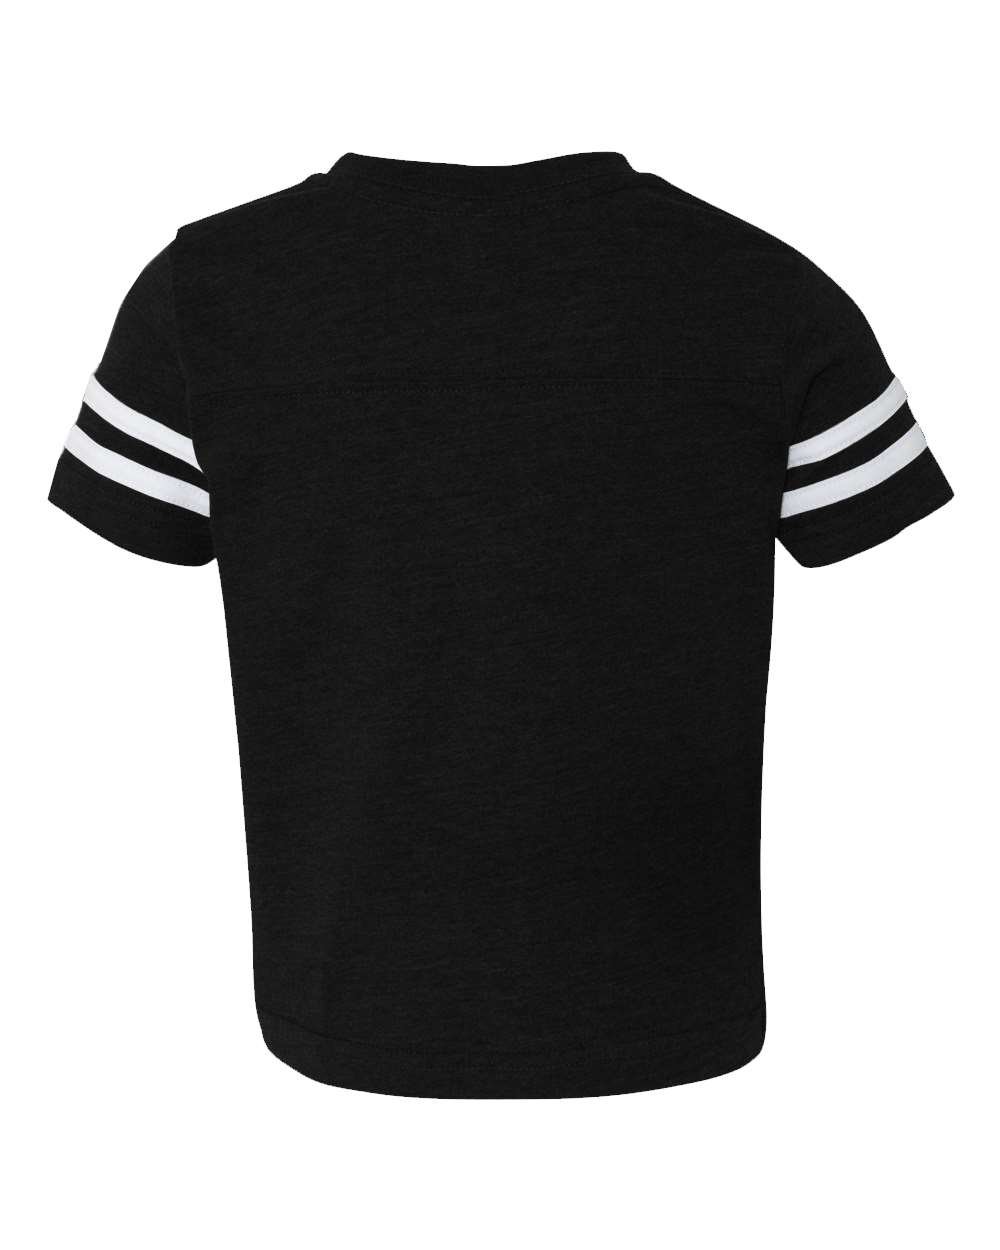 Rules of the Roadhouse Dalton TShirt Rabbit Skins Apparel Toddler /& Kids Fine Jersey Tee T-Shirt T Shirt FREE SHIPPING